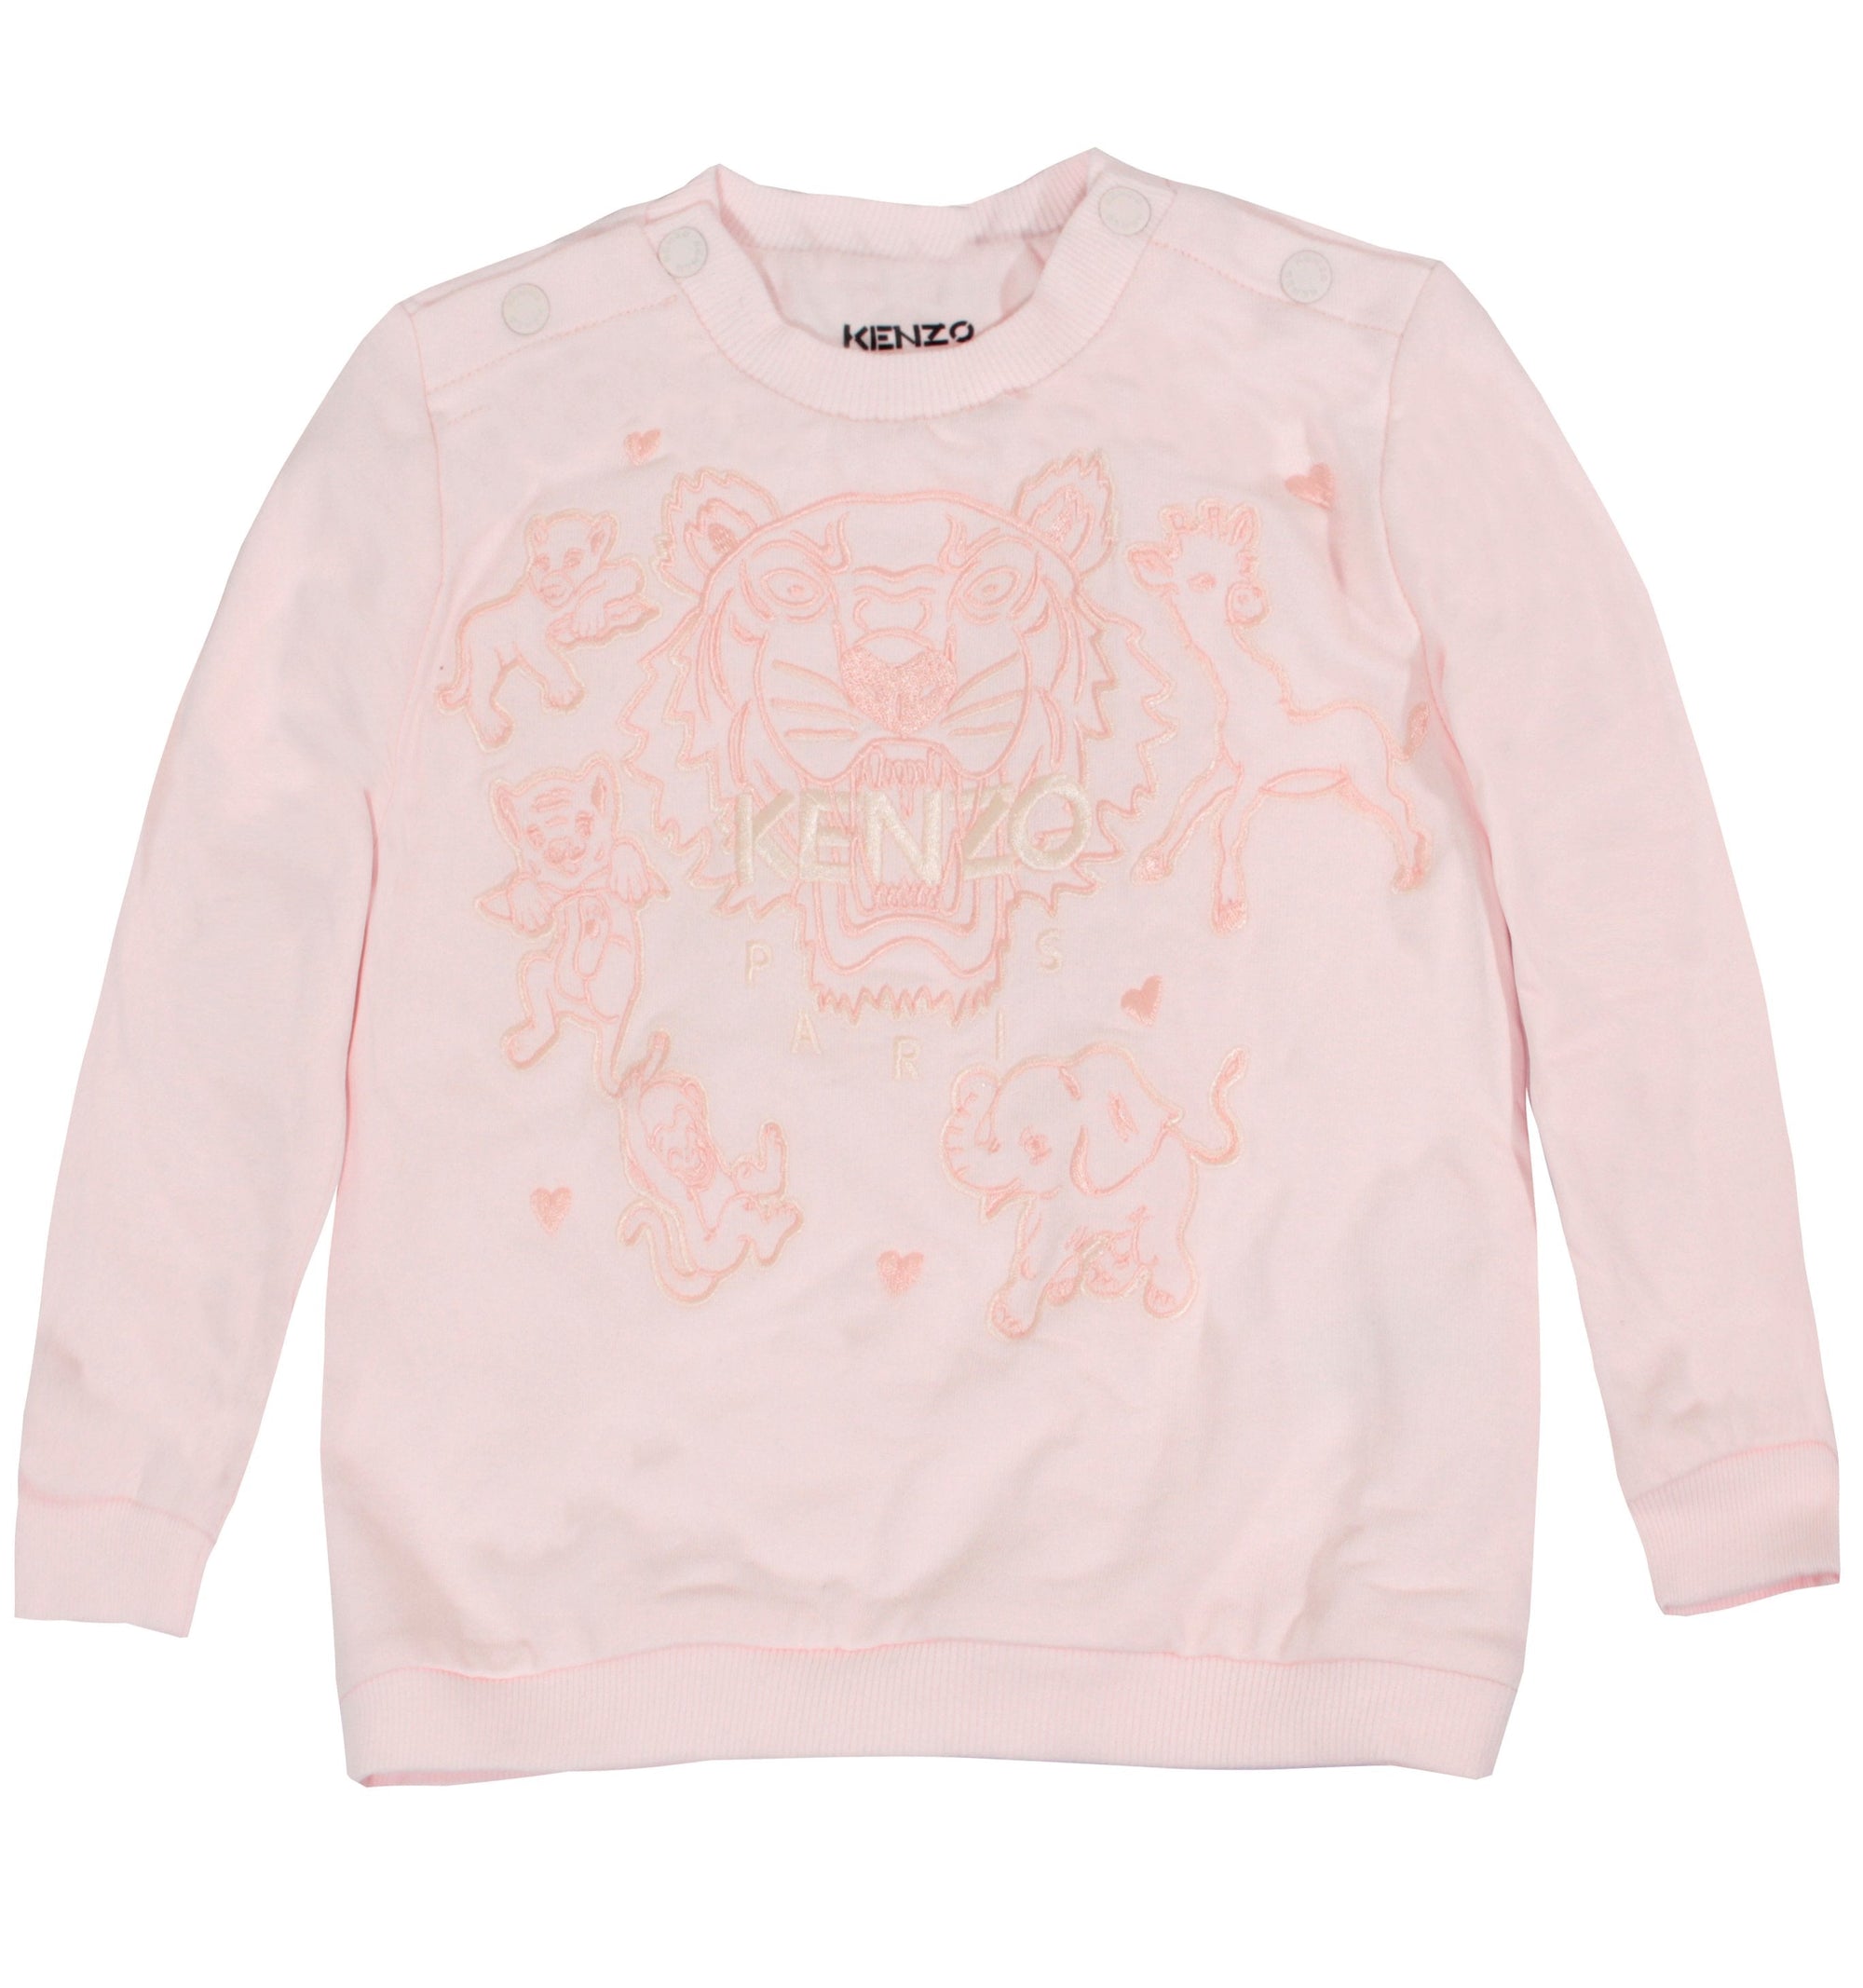 Kenzo Sweatshirt - Pale Pink